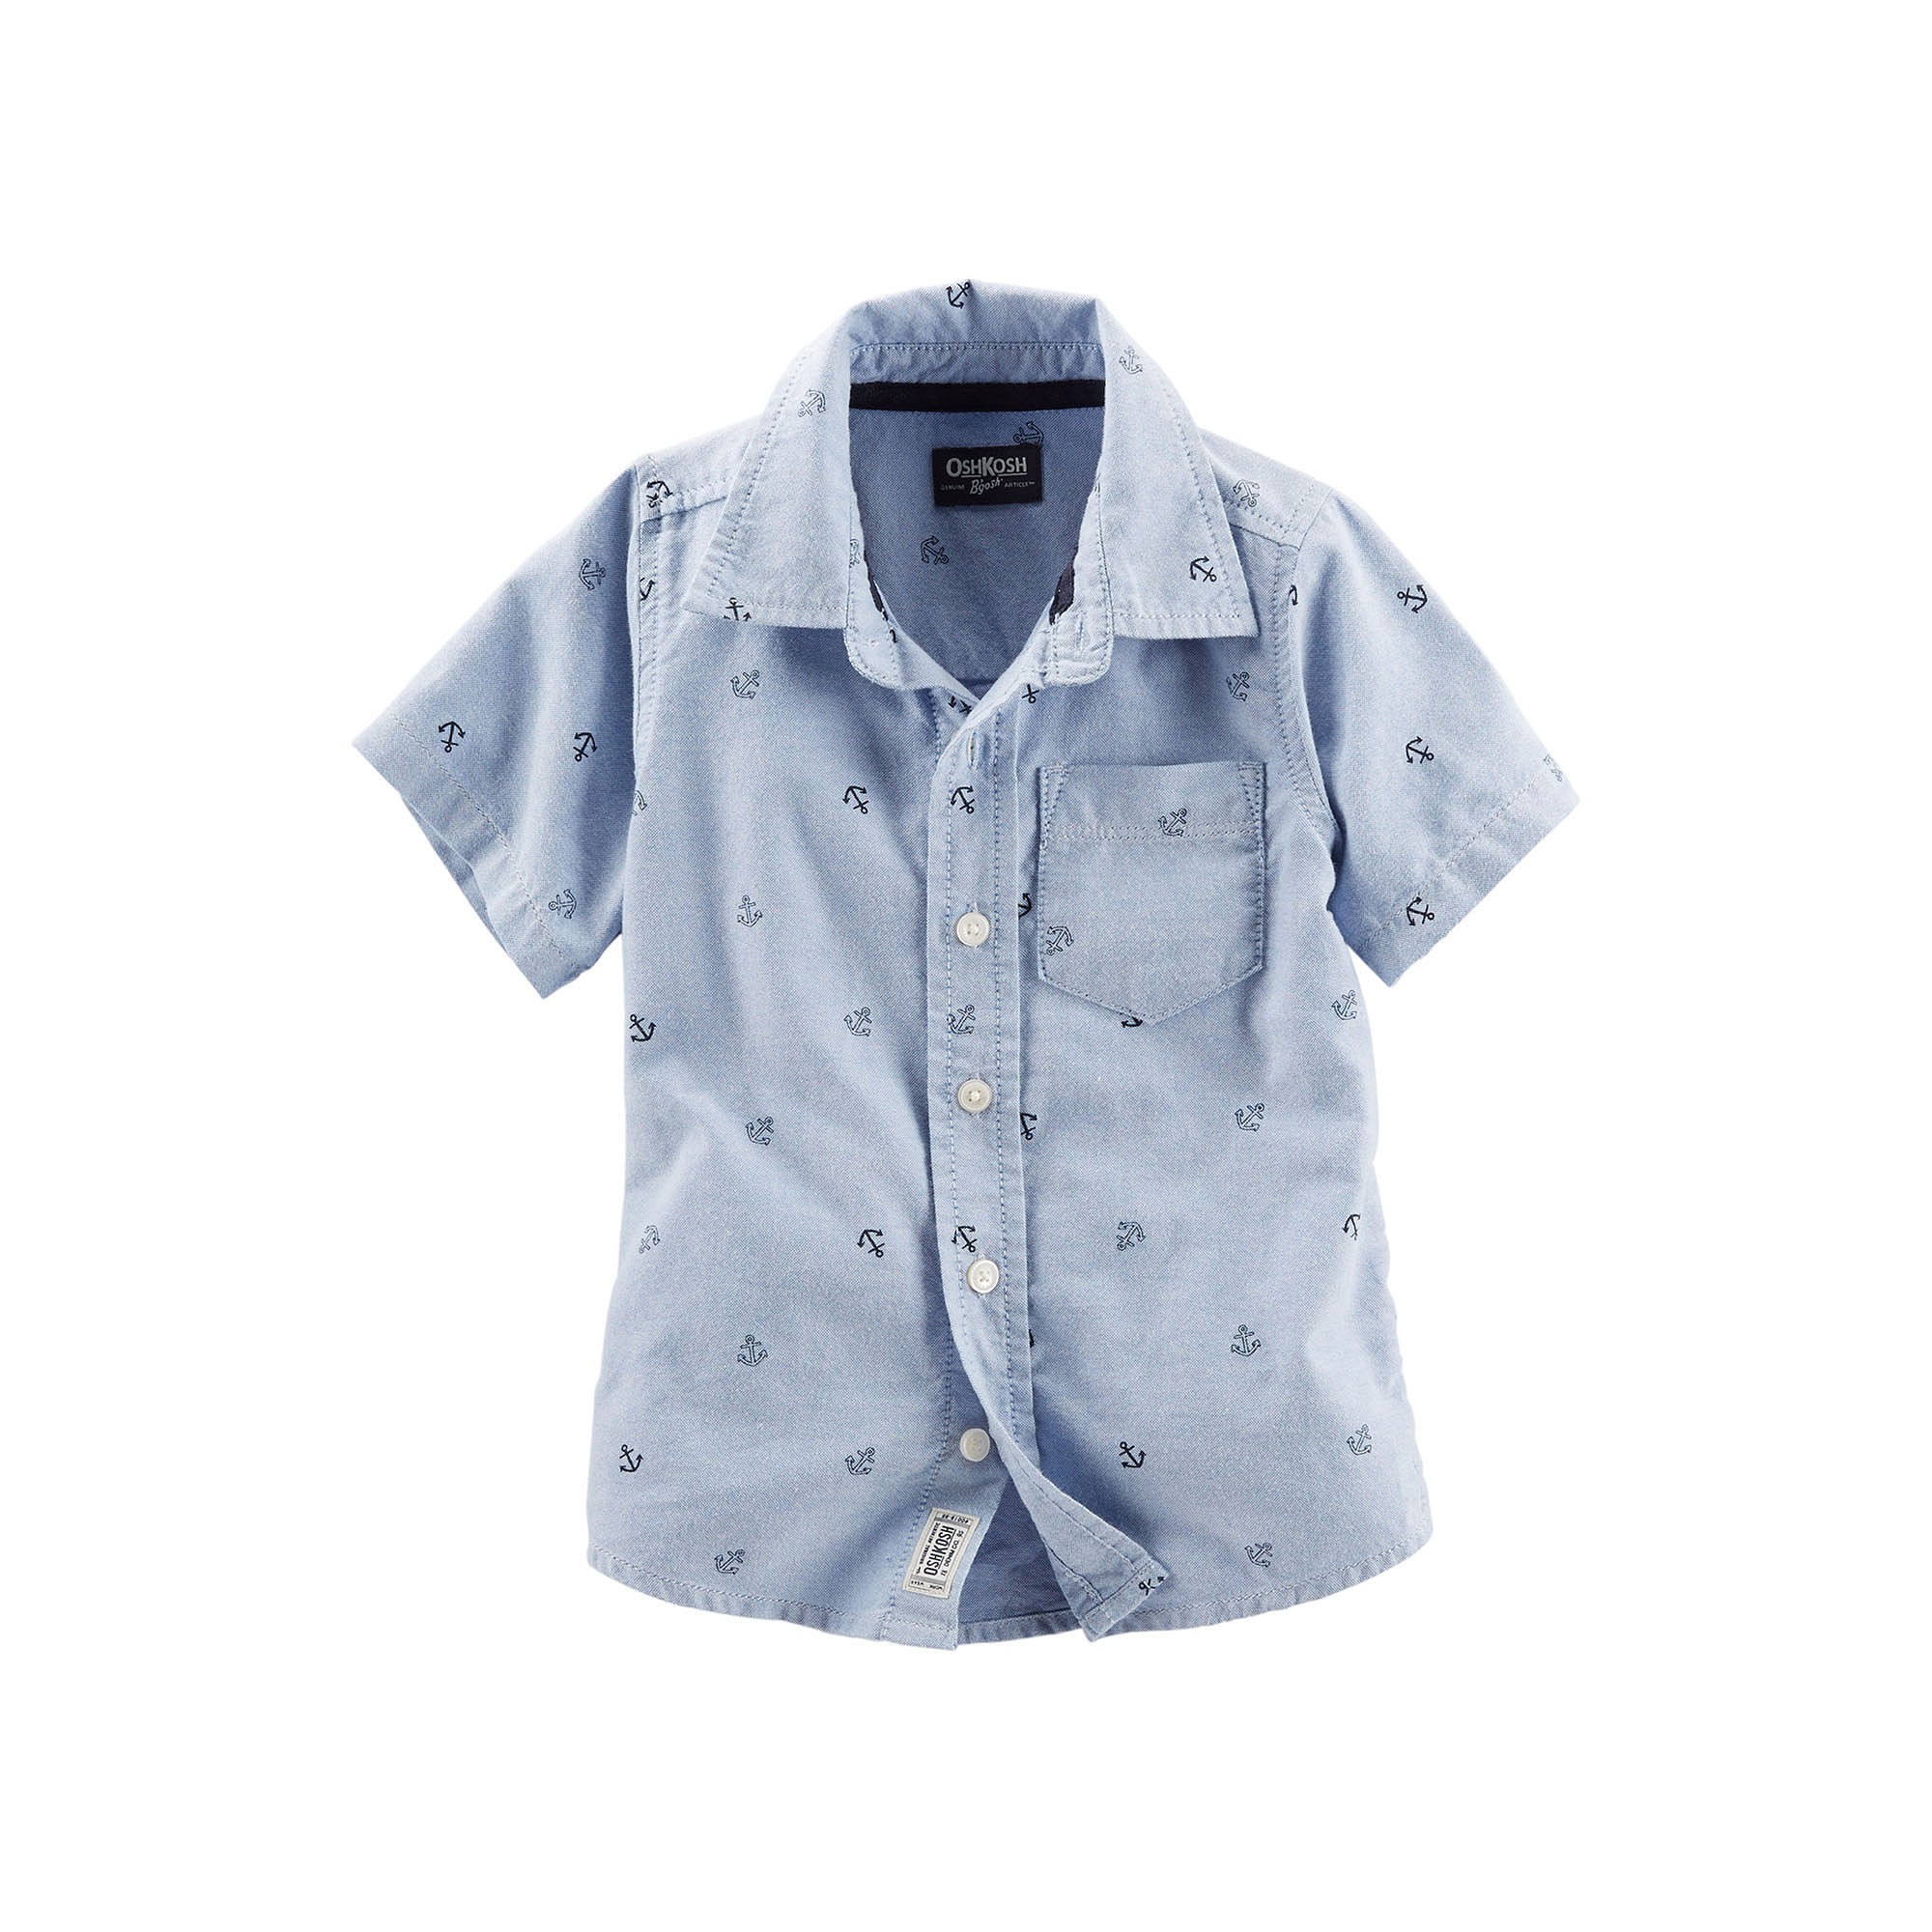 OshKosh B'gosh Short-Sleeve Woven Cotton Shirt - Preschool Boys 4-7